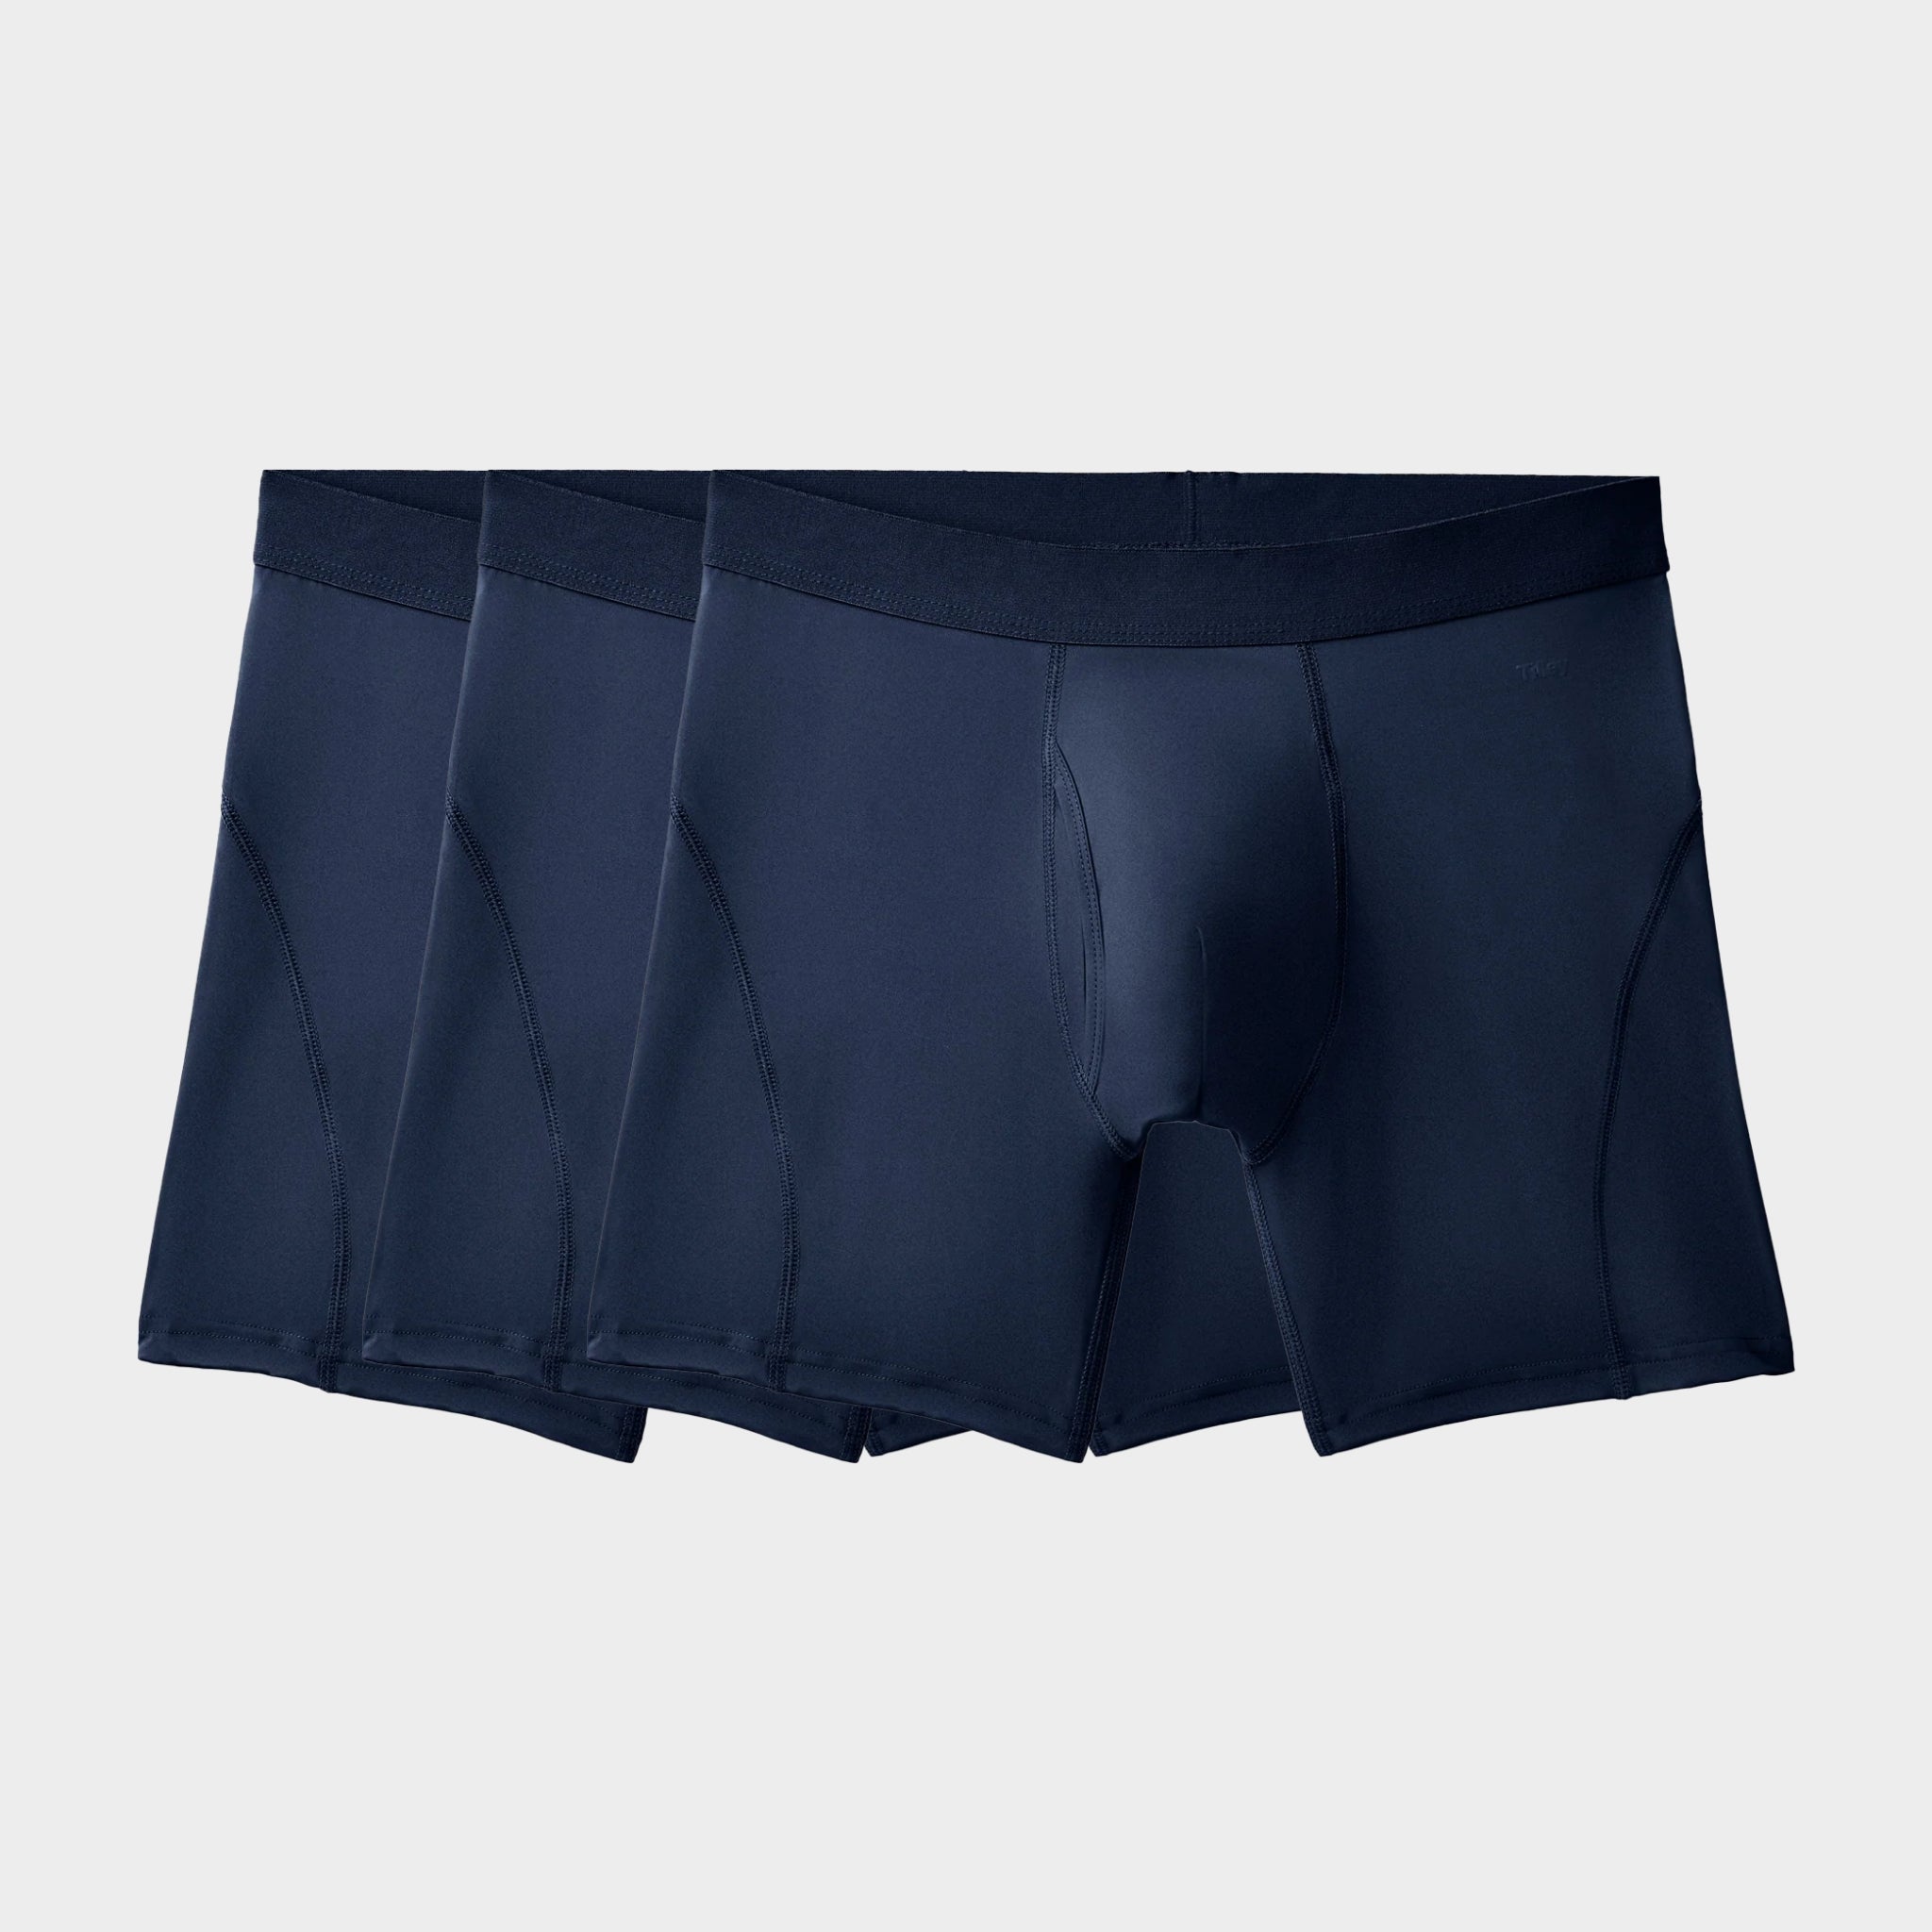 Star Navy, Women's Boxer's & Boy Shorts, Woxer